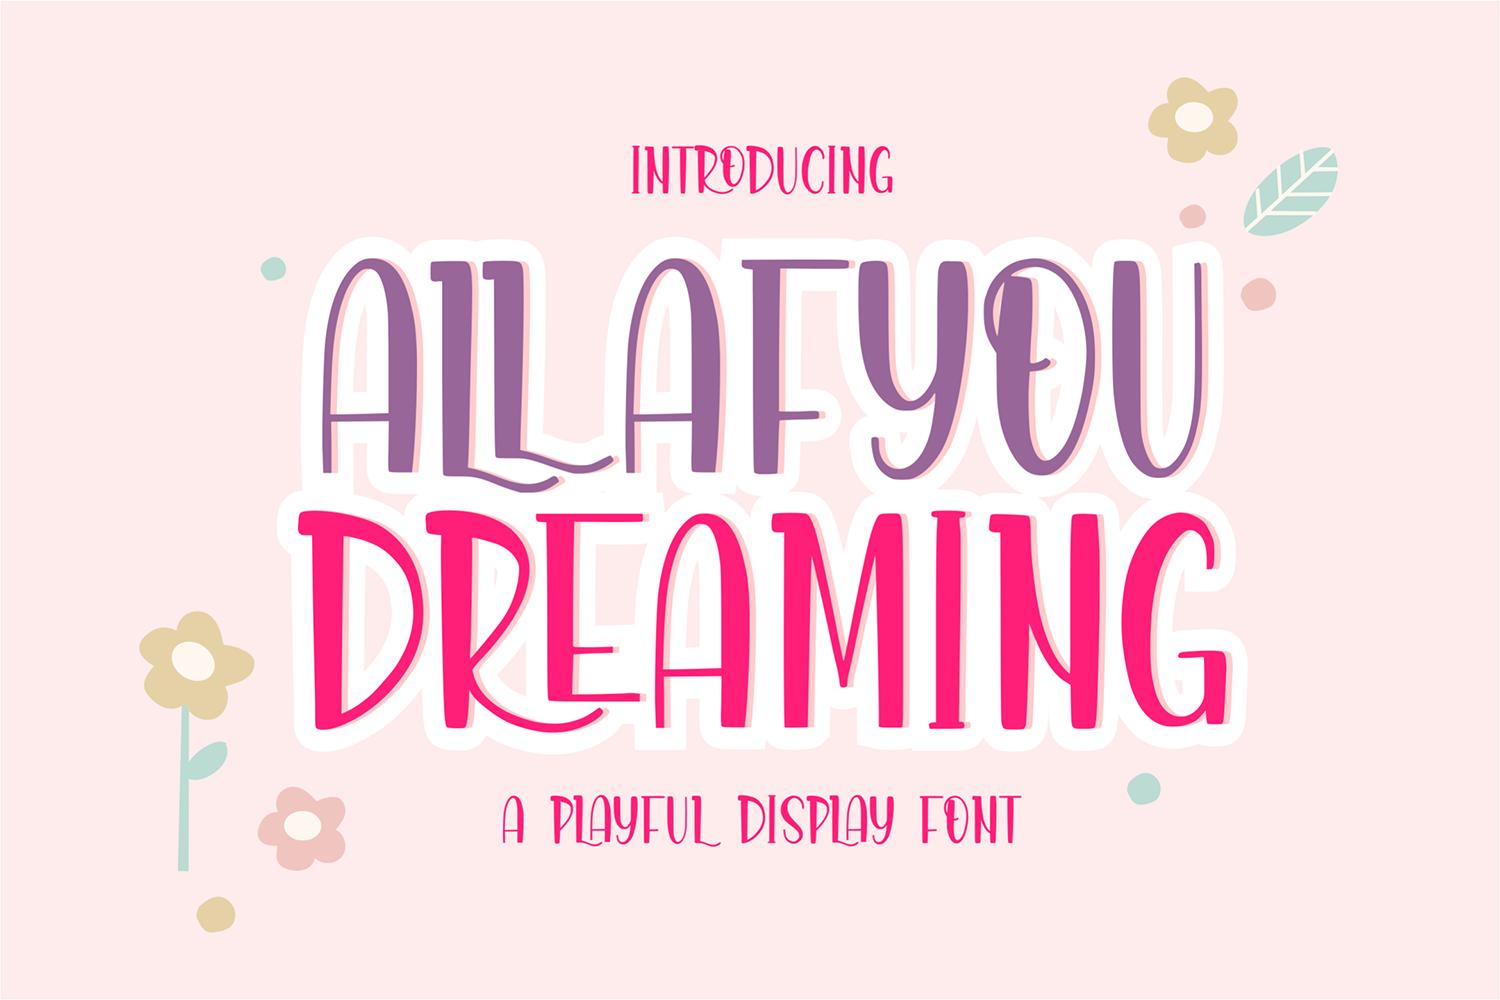 Allafyou Dreaming Free Font